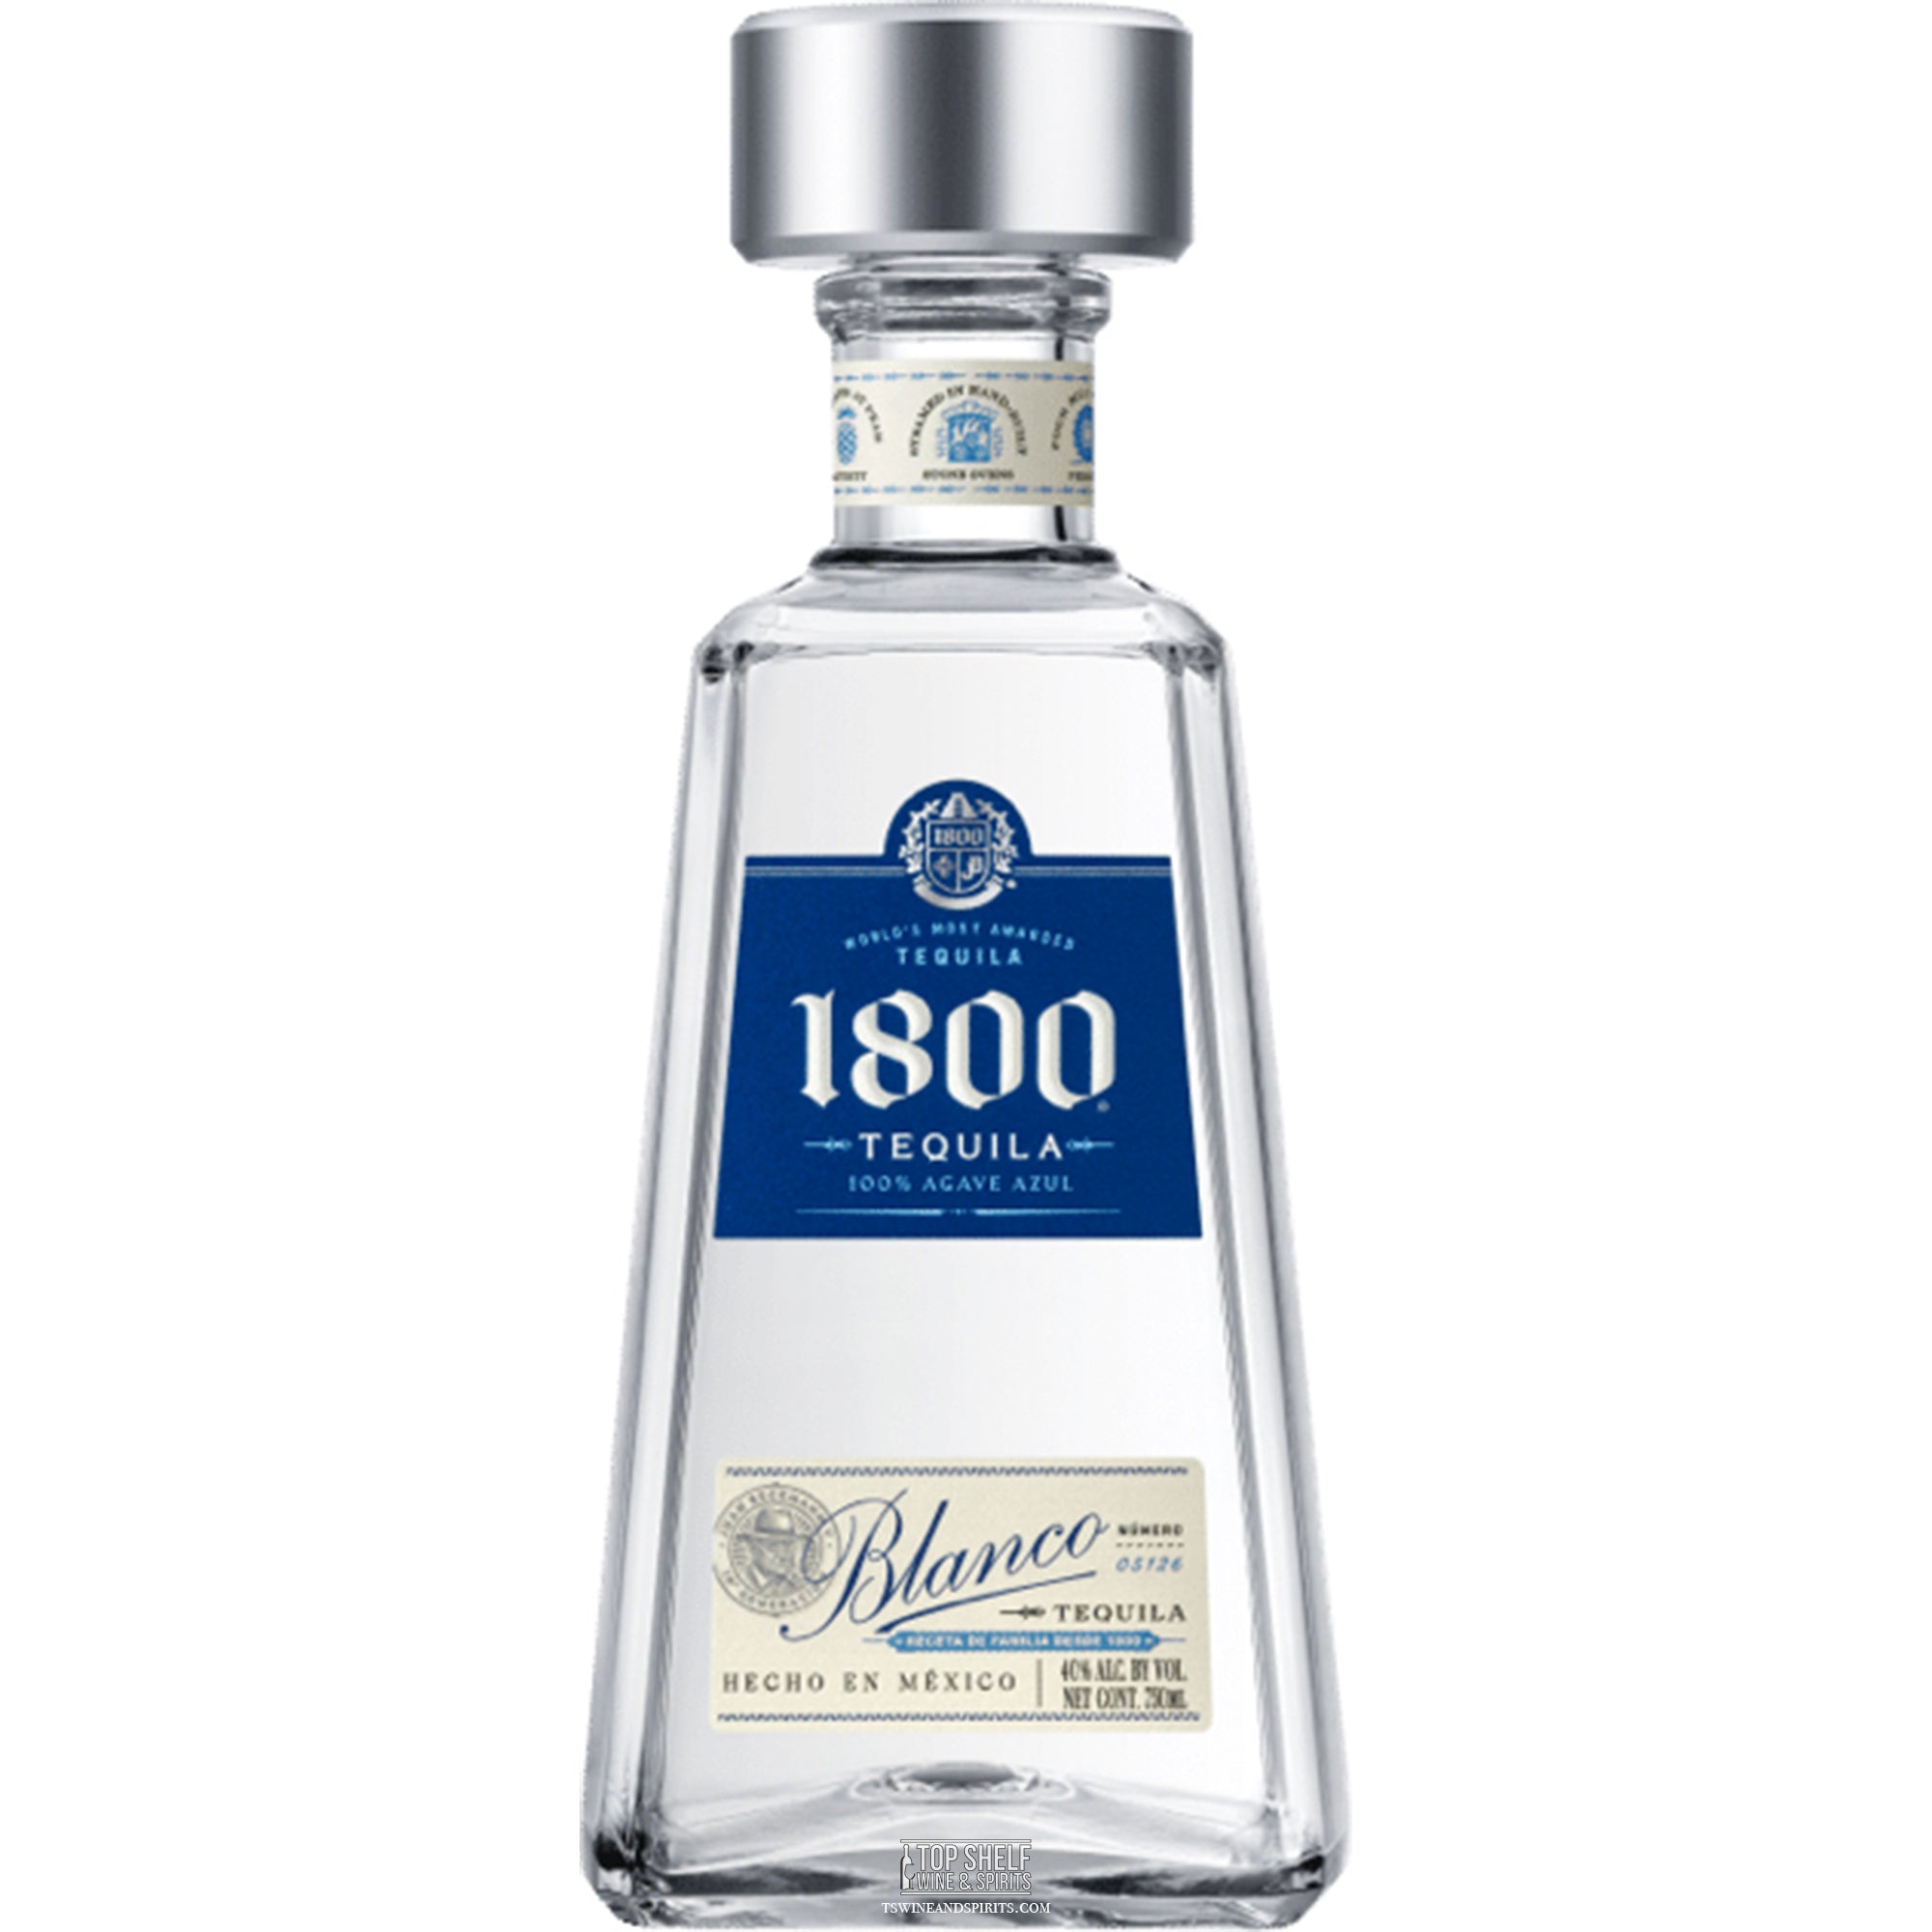 1800 tequila blanco